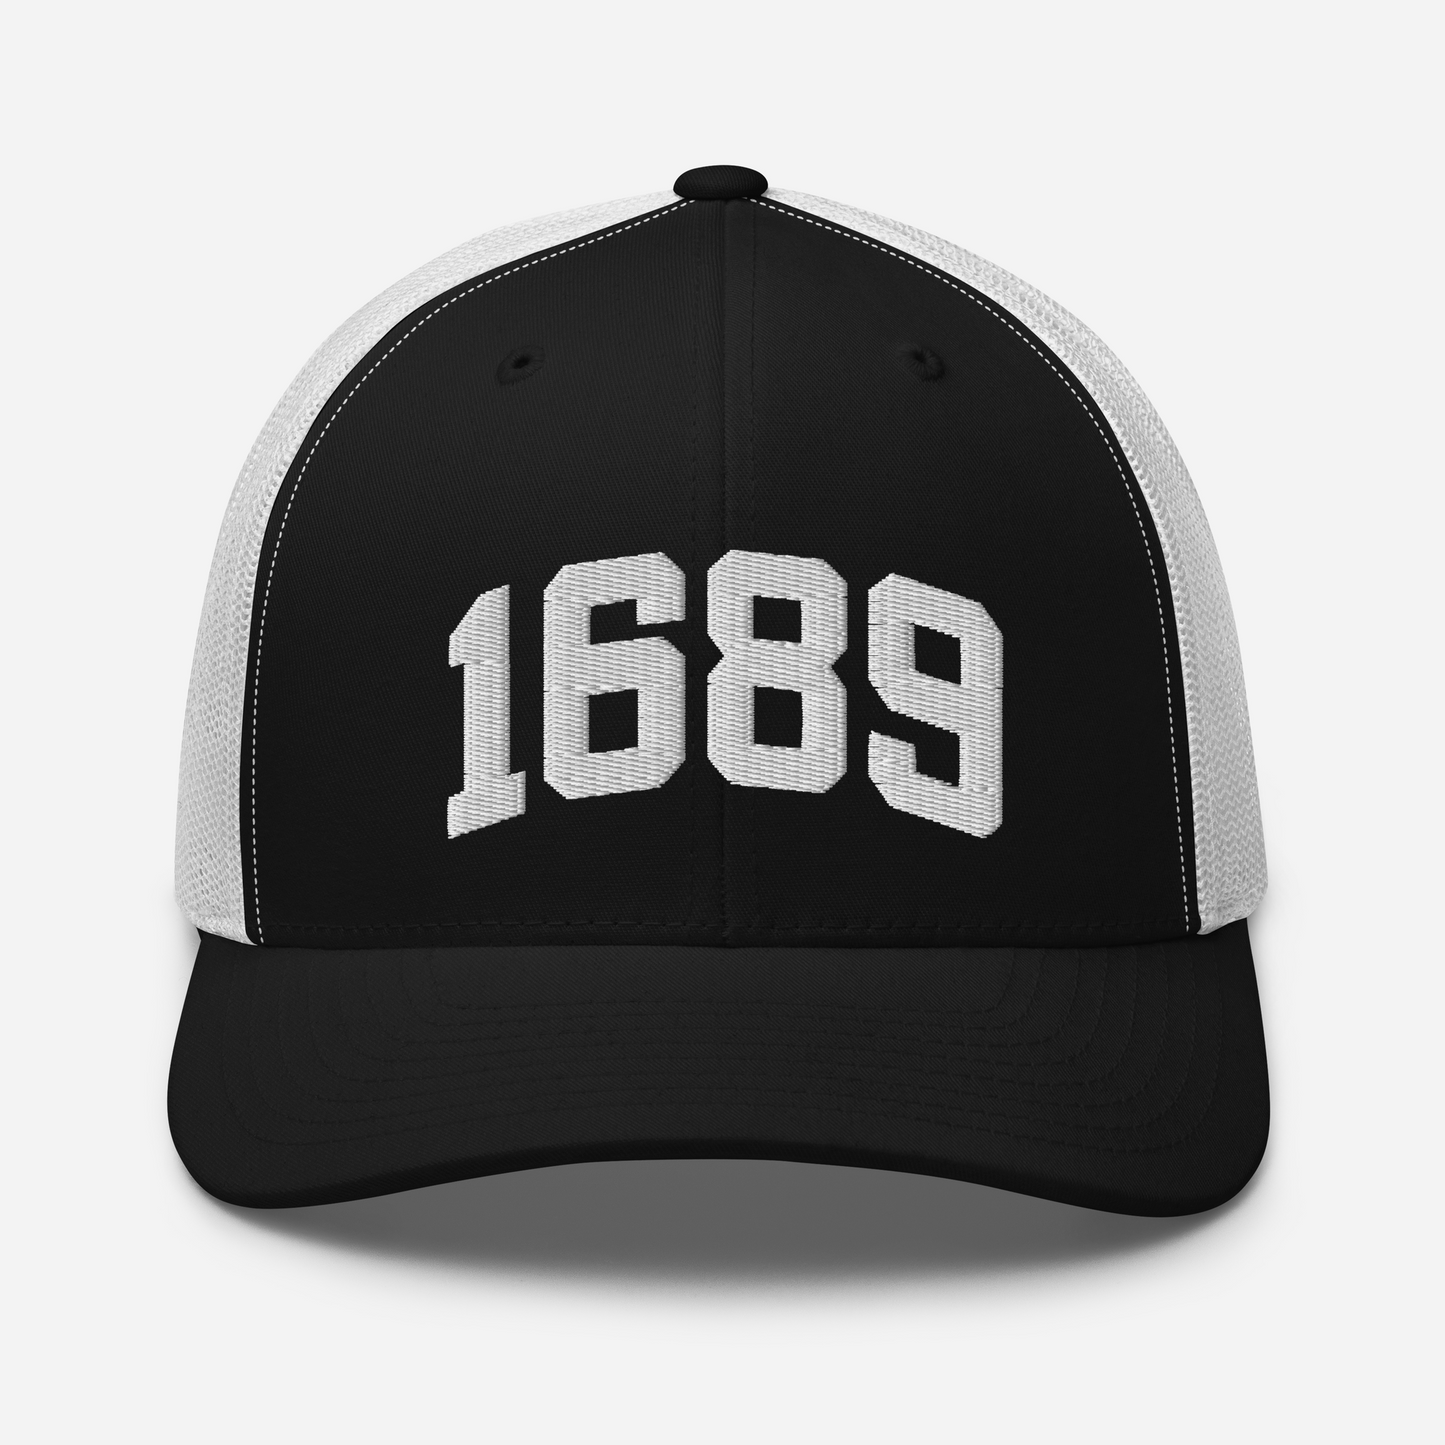 1689 Trucker Hat